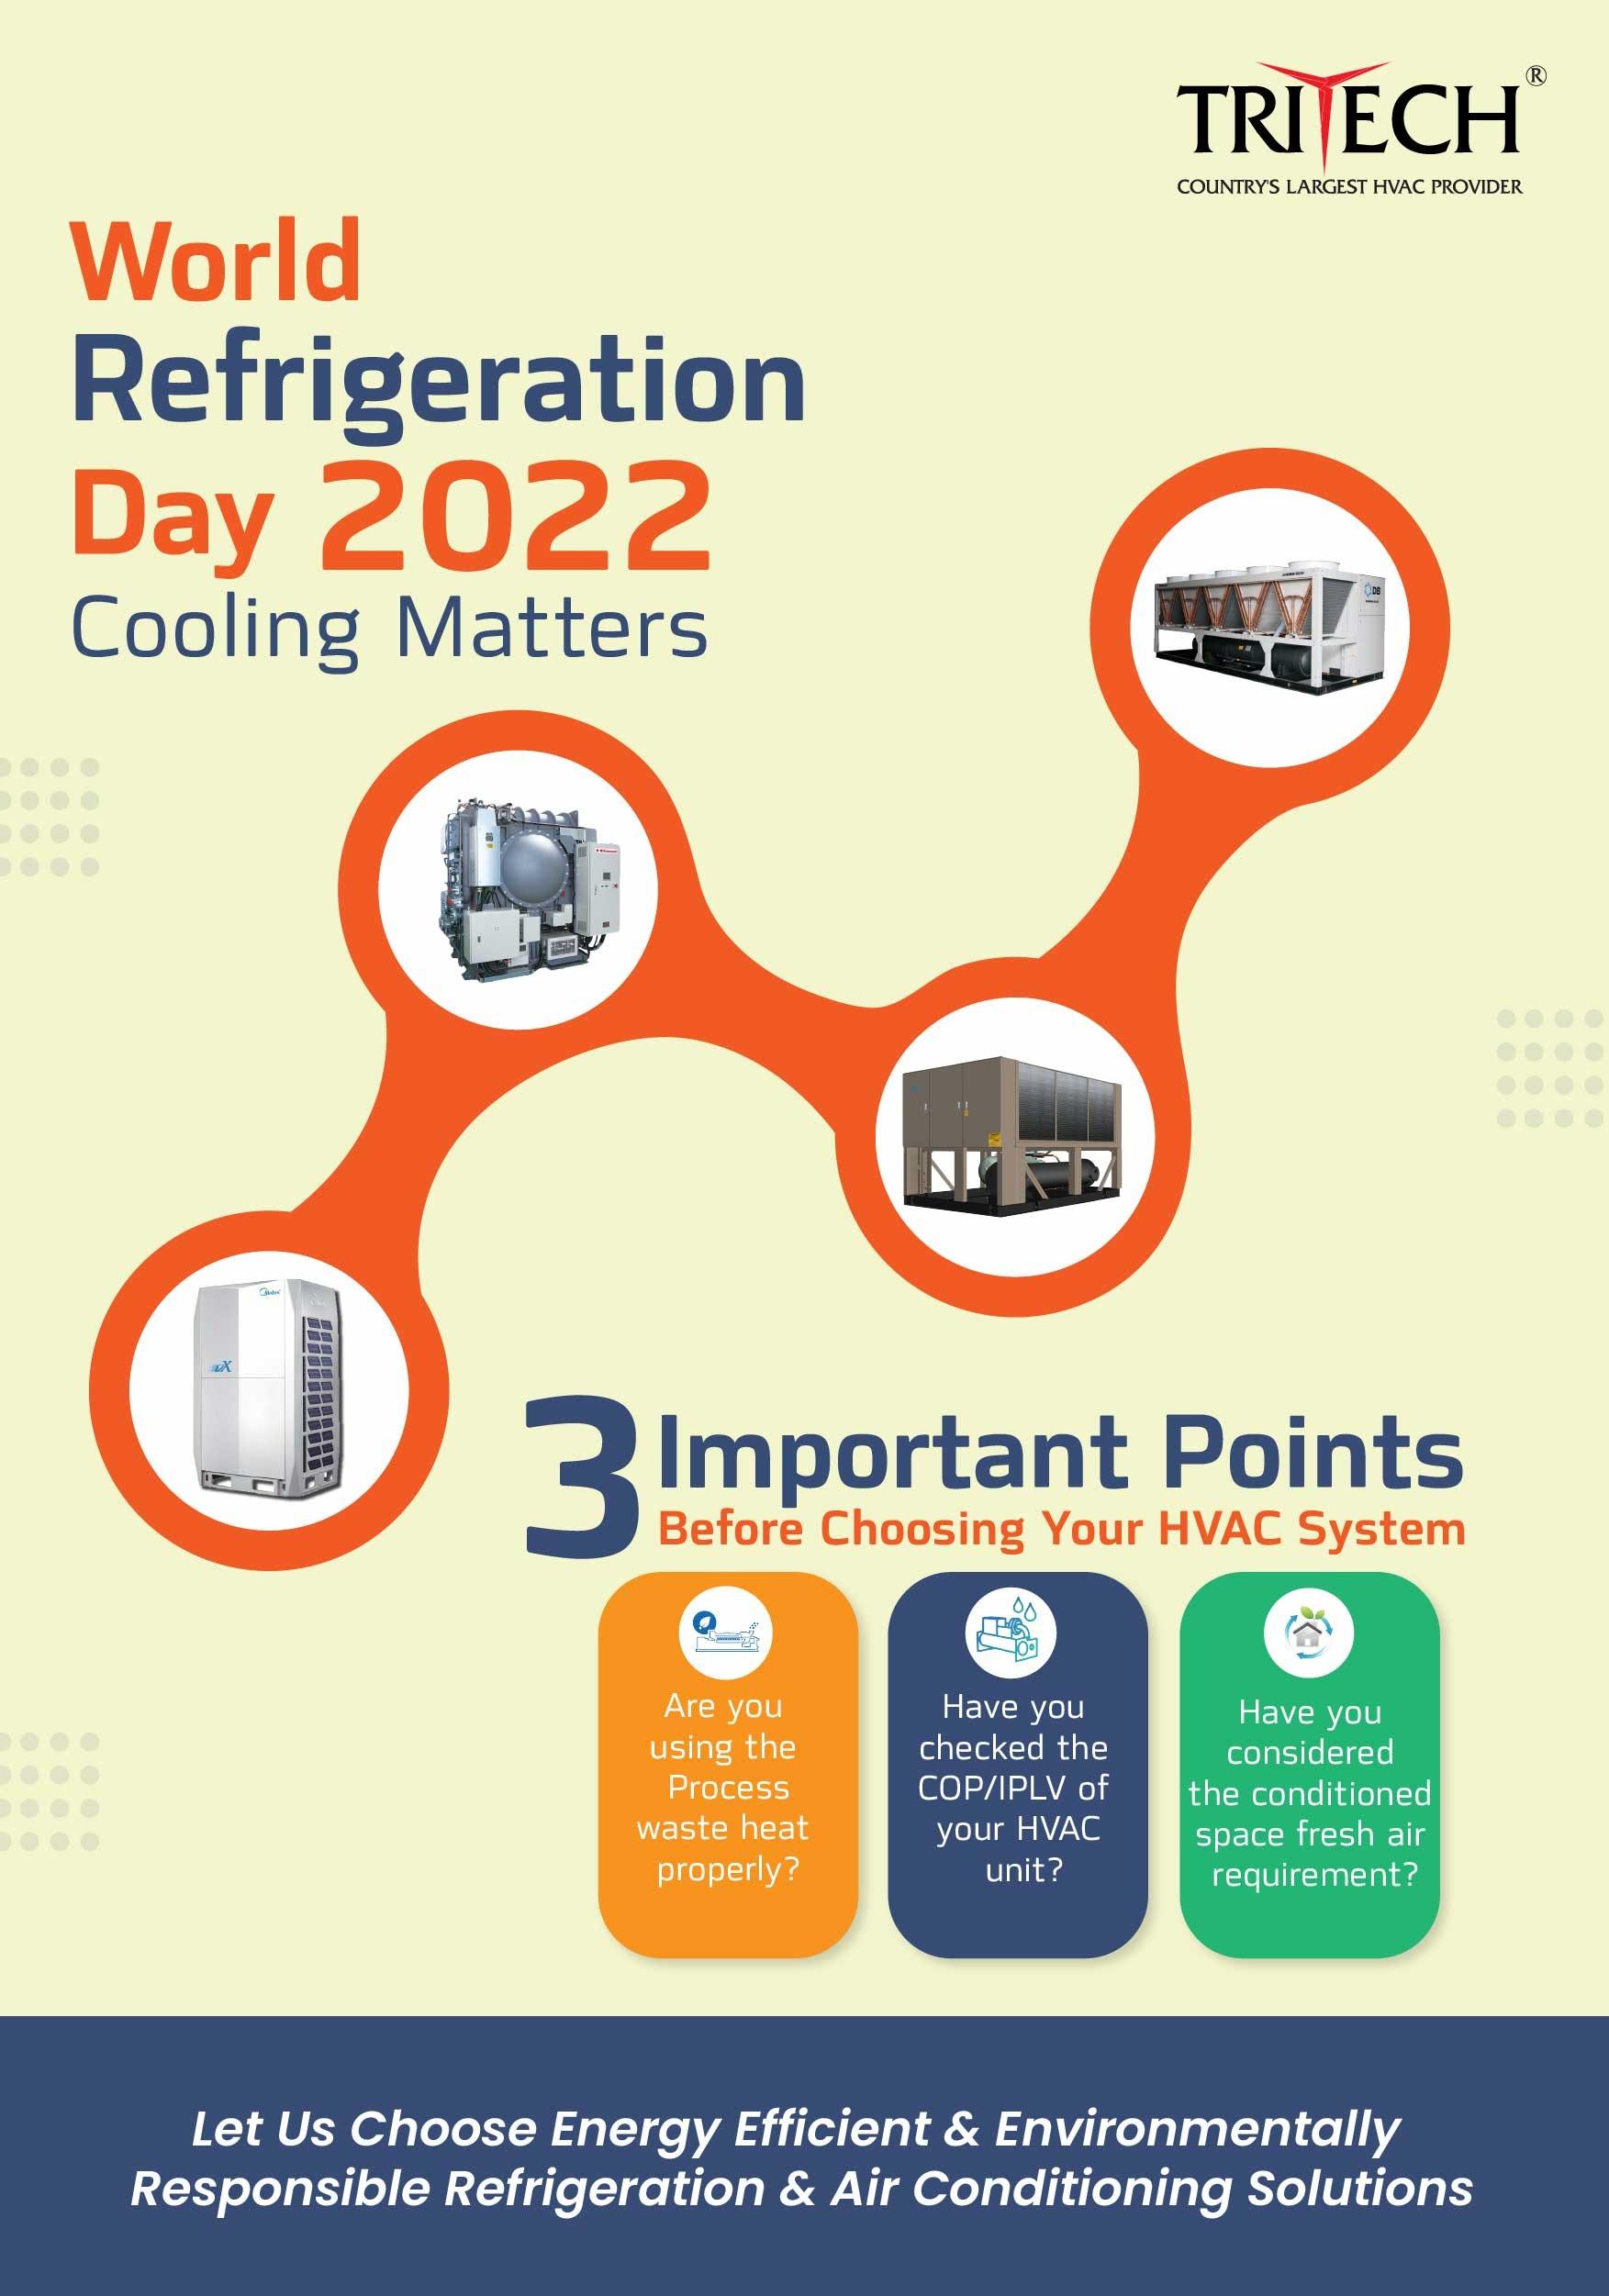 Tritech Refrigeration Day